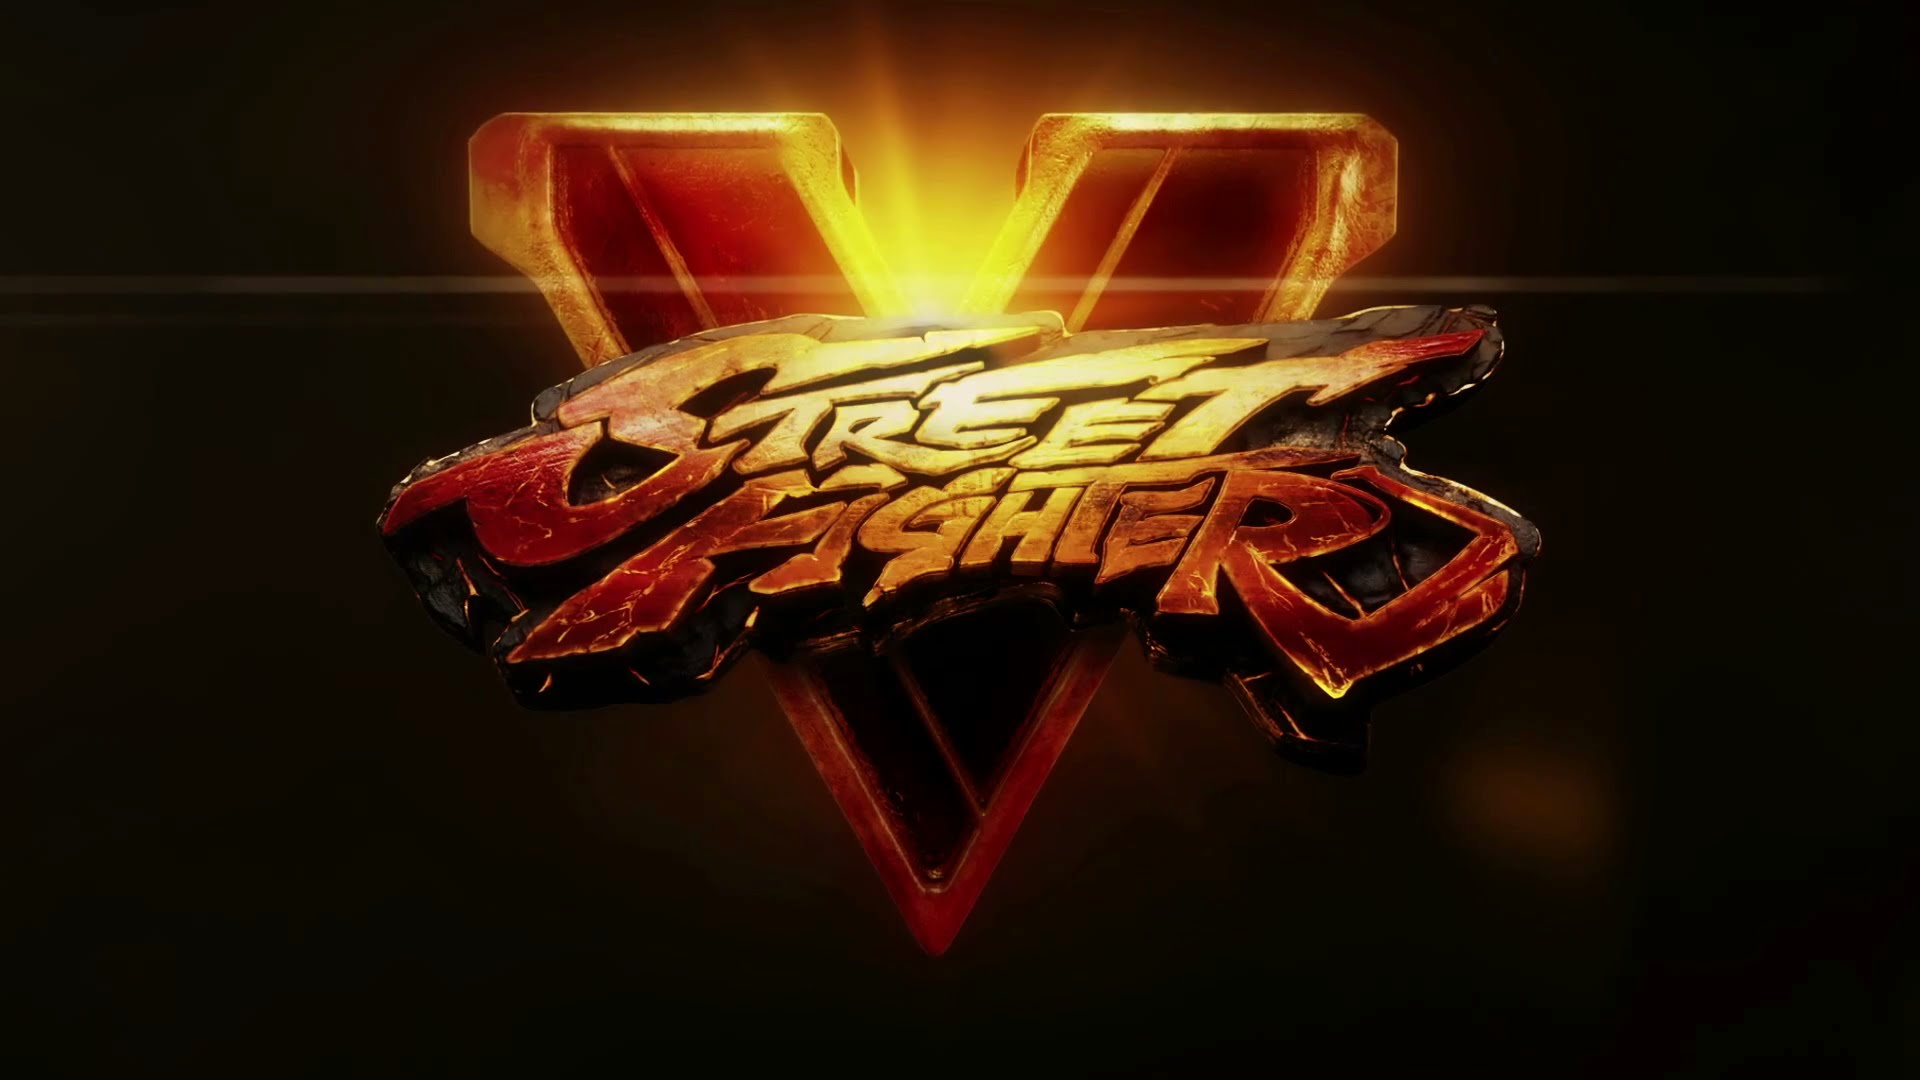 Street Fighter 5 - Ryu vs. Chun-Li(Full Fight) [1080p HD] - YouTube